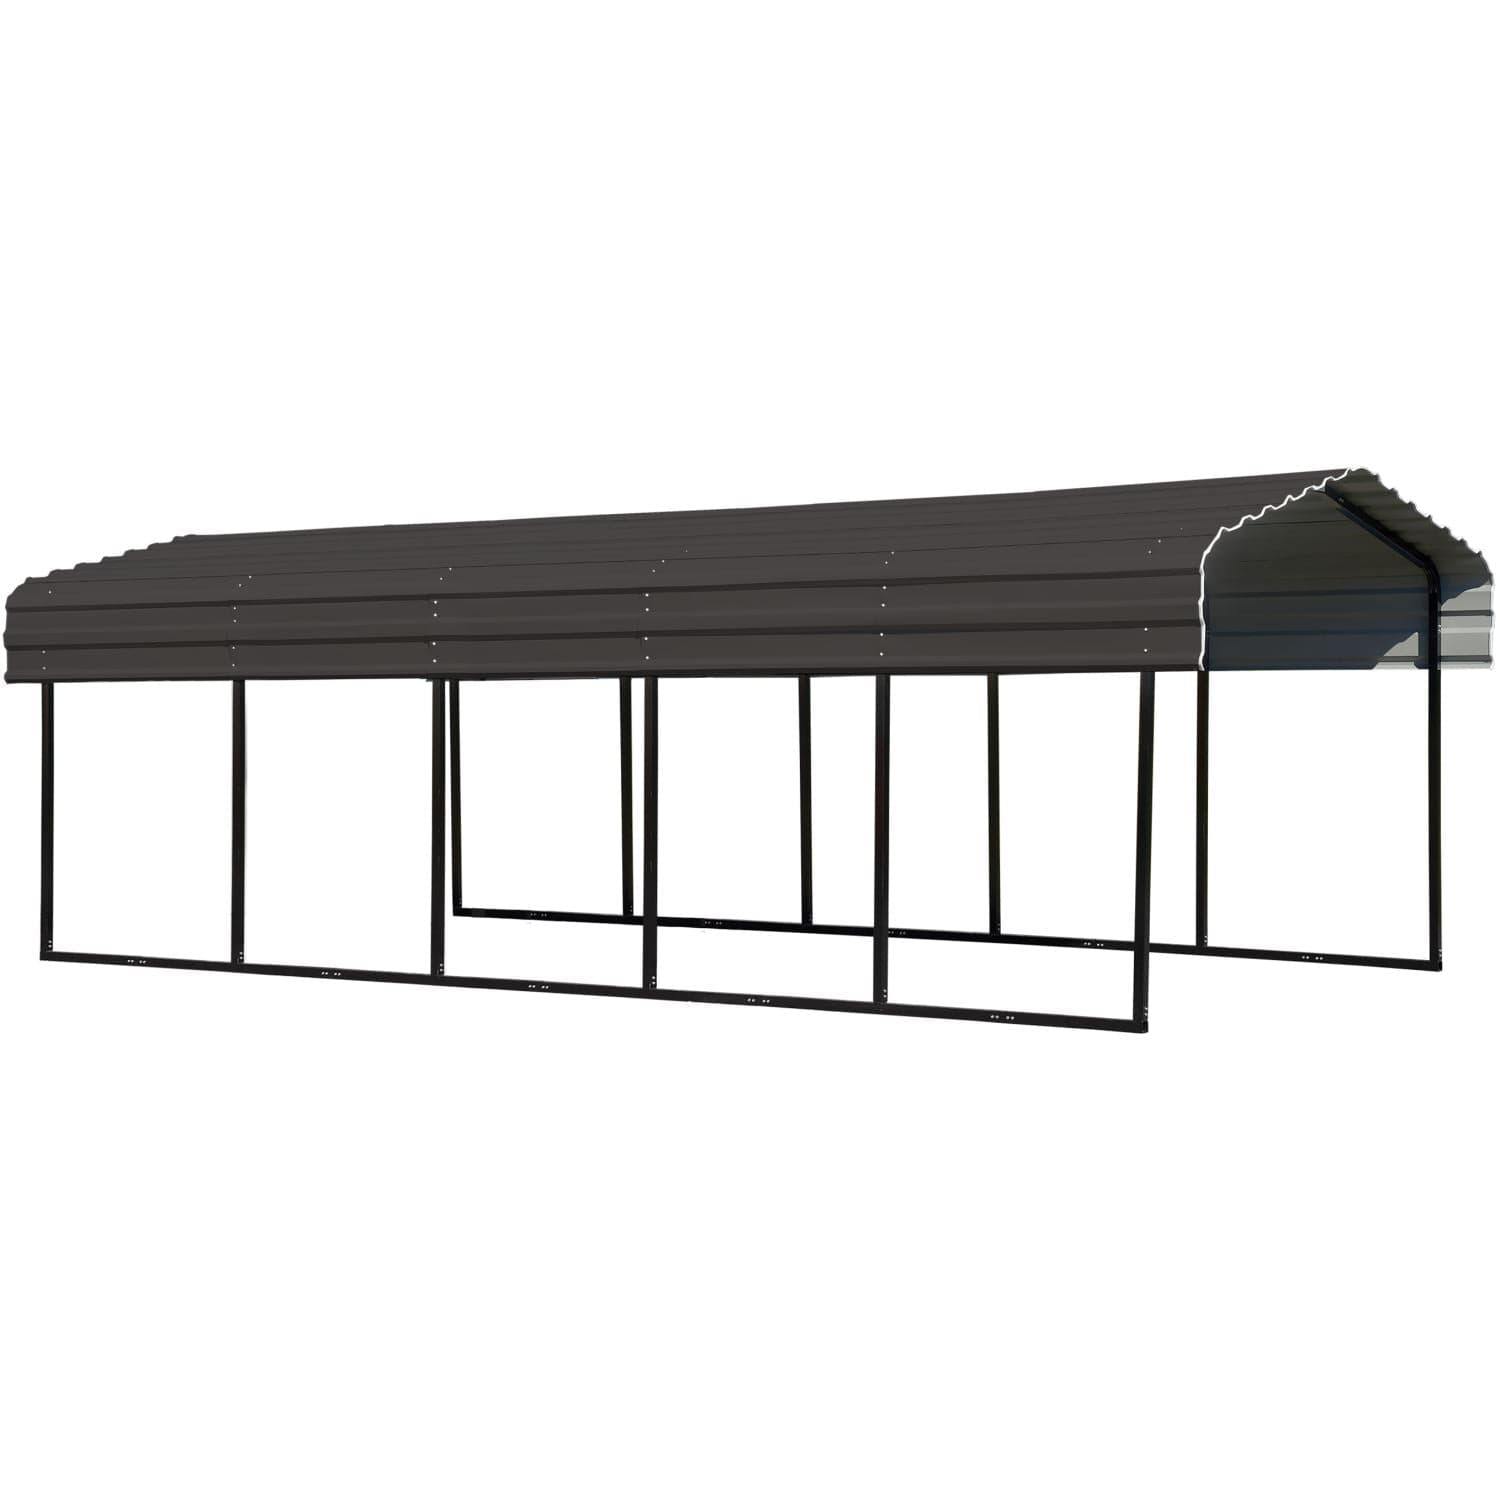 Arrow Steel Carport 10' x 24' x 7' Galvanized Black/Charcoal - mygreenhousestore.com